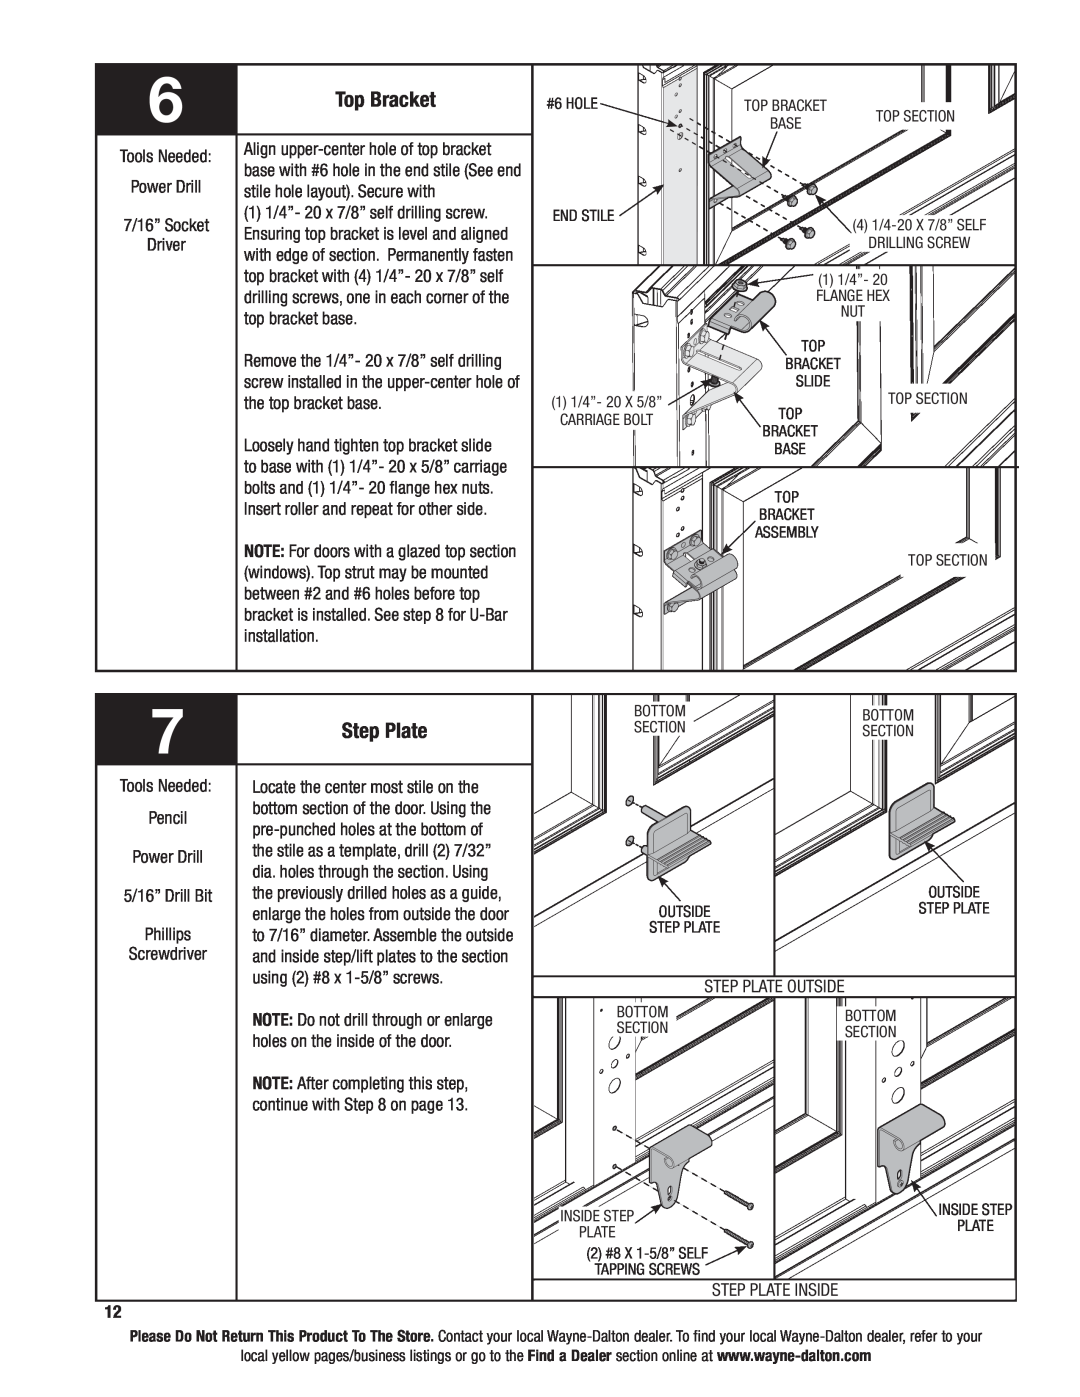 Wayne-Dalton 46 installation instructions Top Bracket, Step Plate 